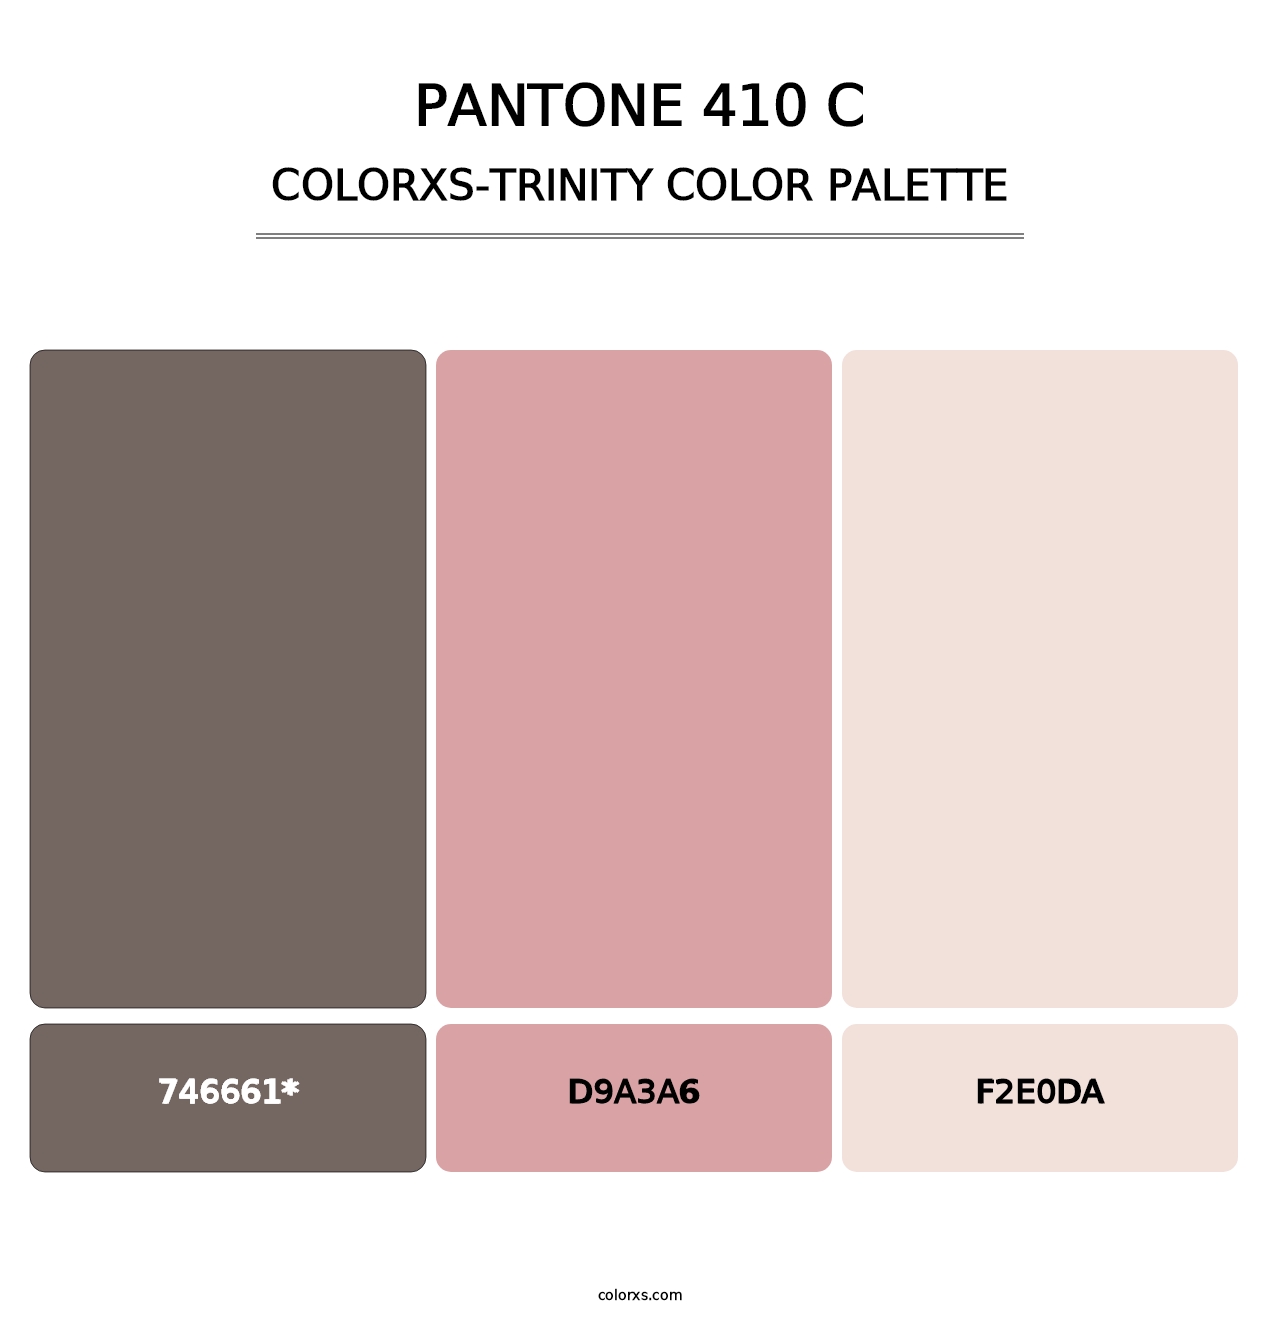 PANTONE 410 C - Colorxs Trinity Palette